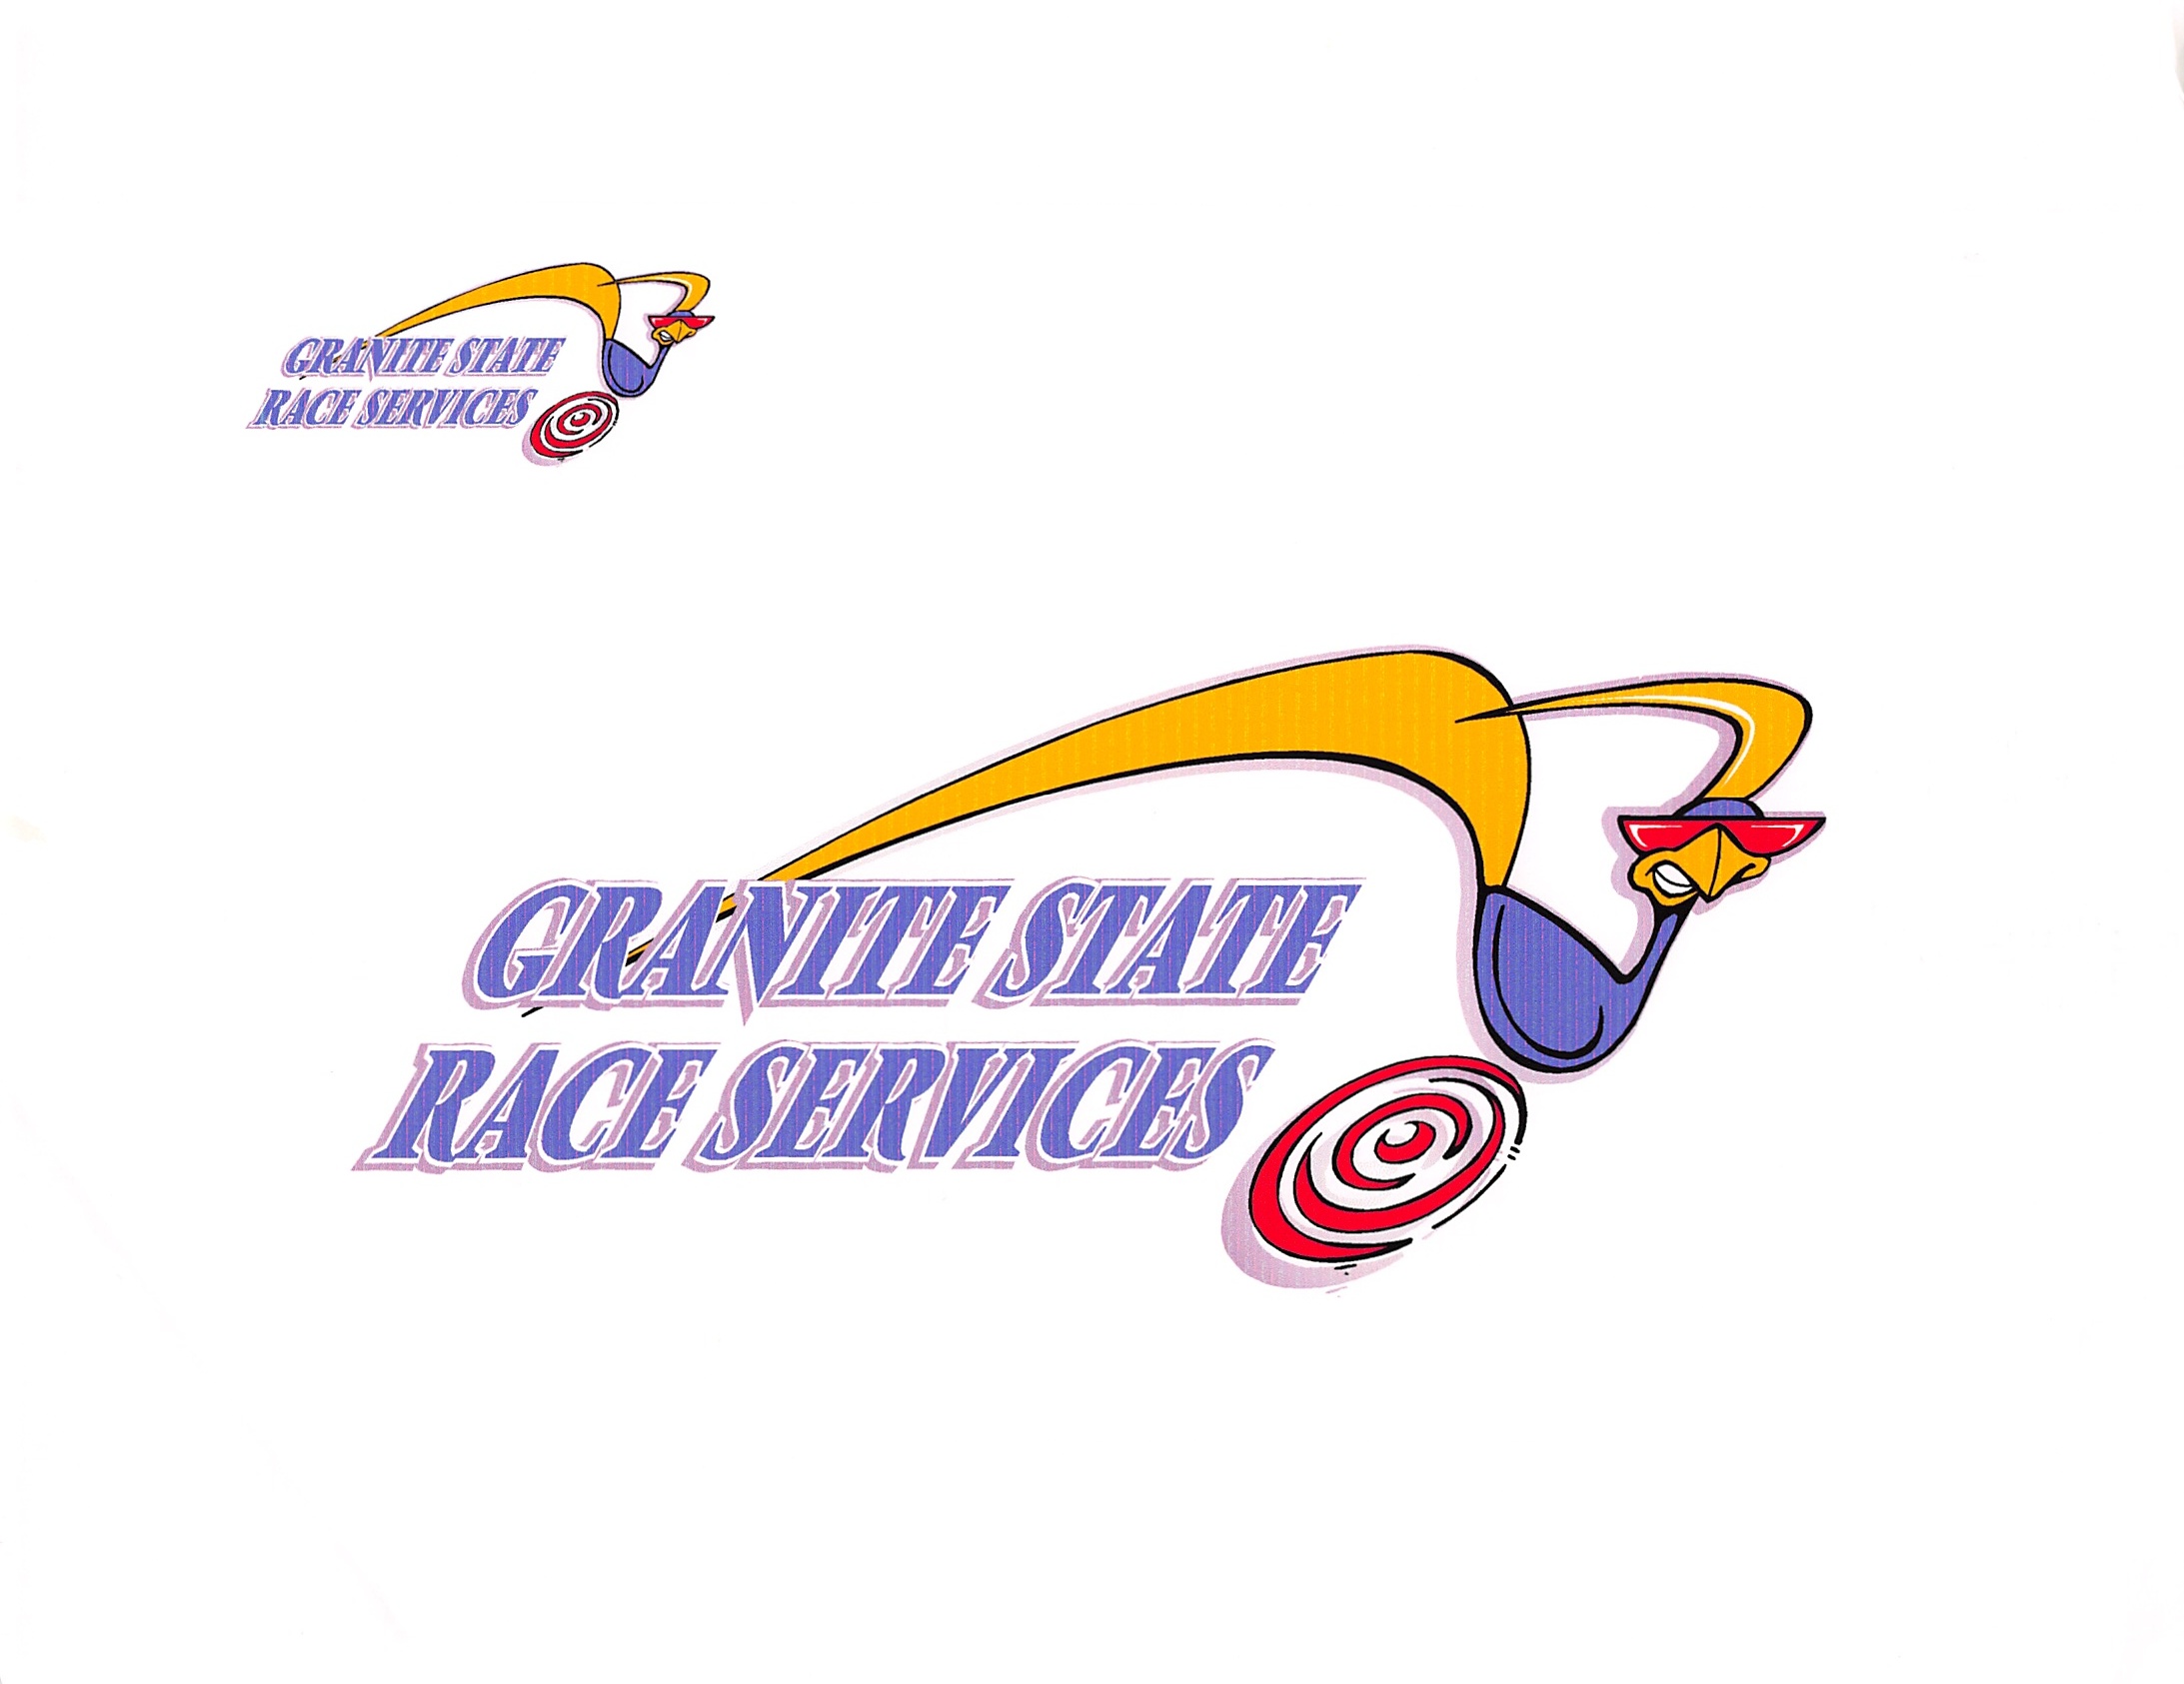 Granite State Race Services, LLC